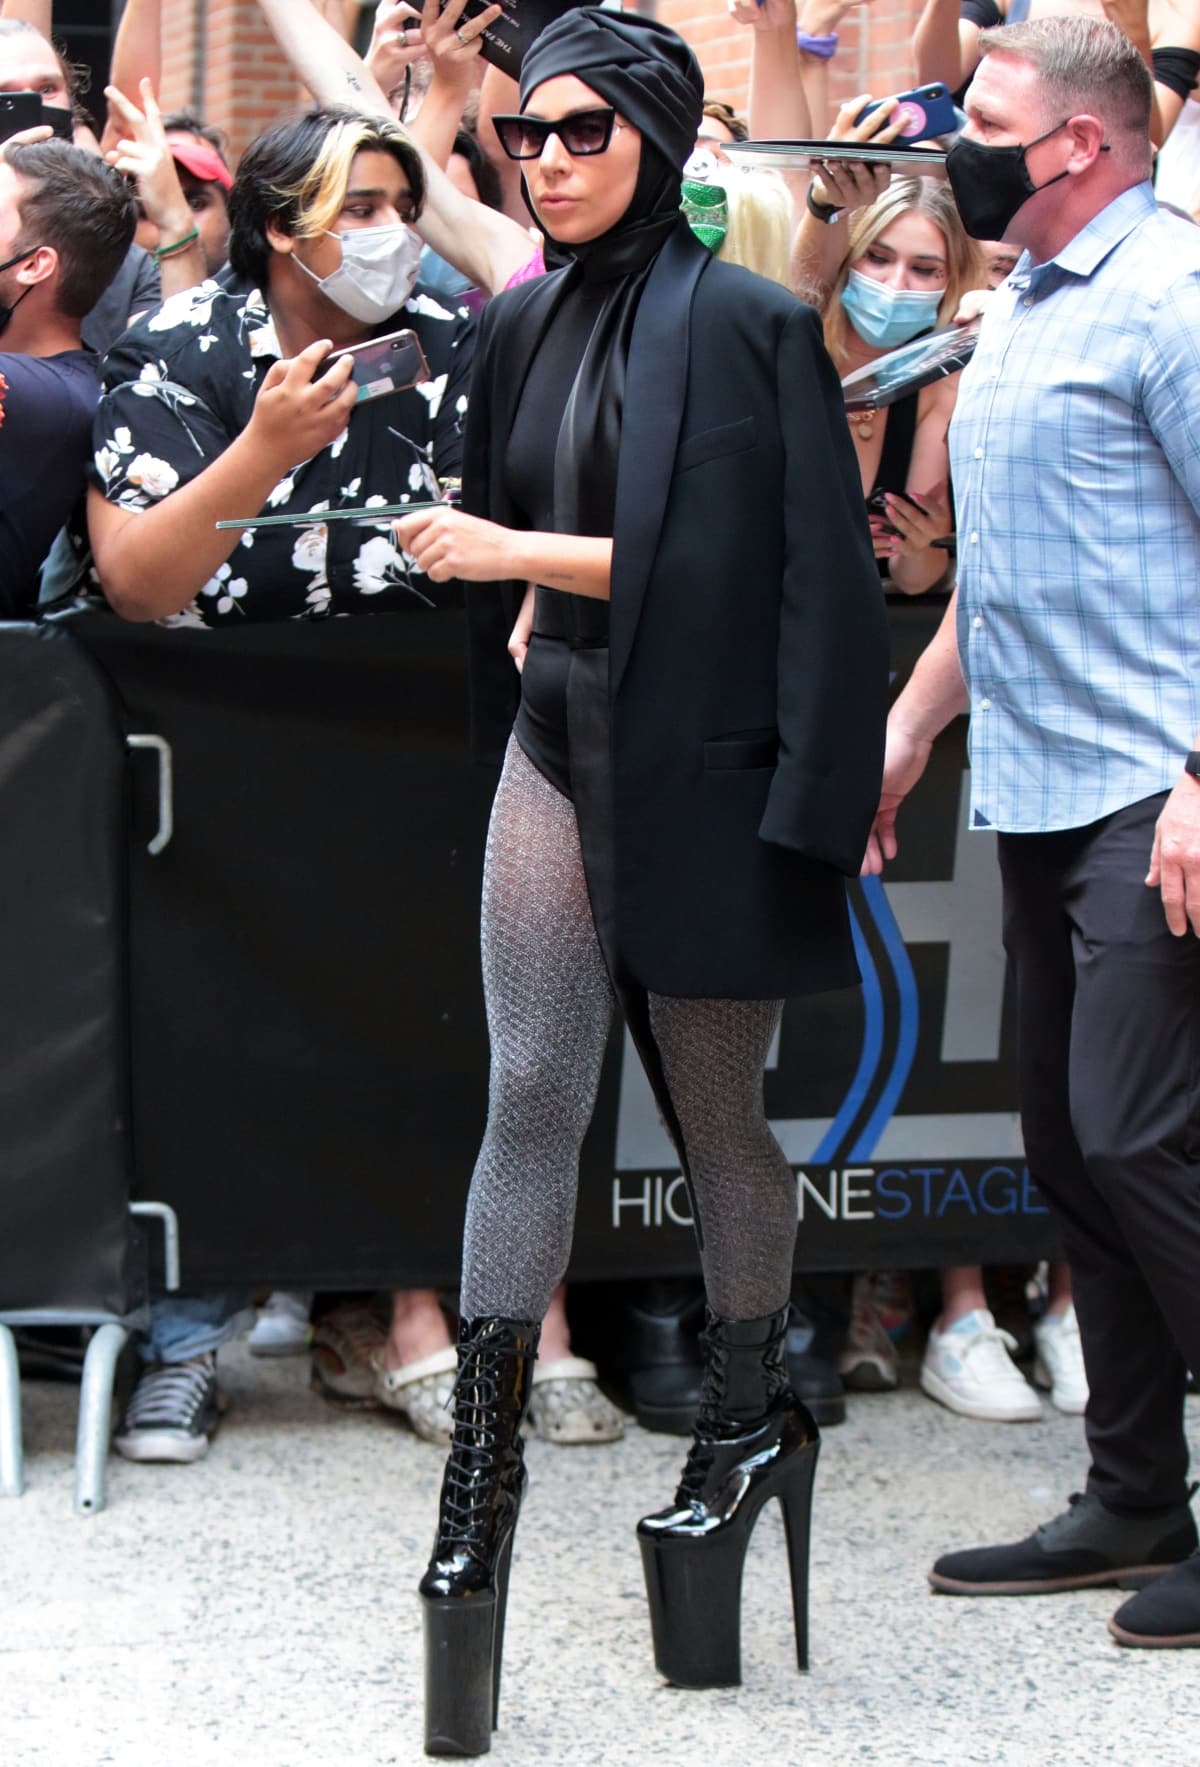 Lady Gaga wearing towering platform boots at Radio City Music Hall in New York City